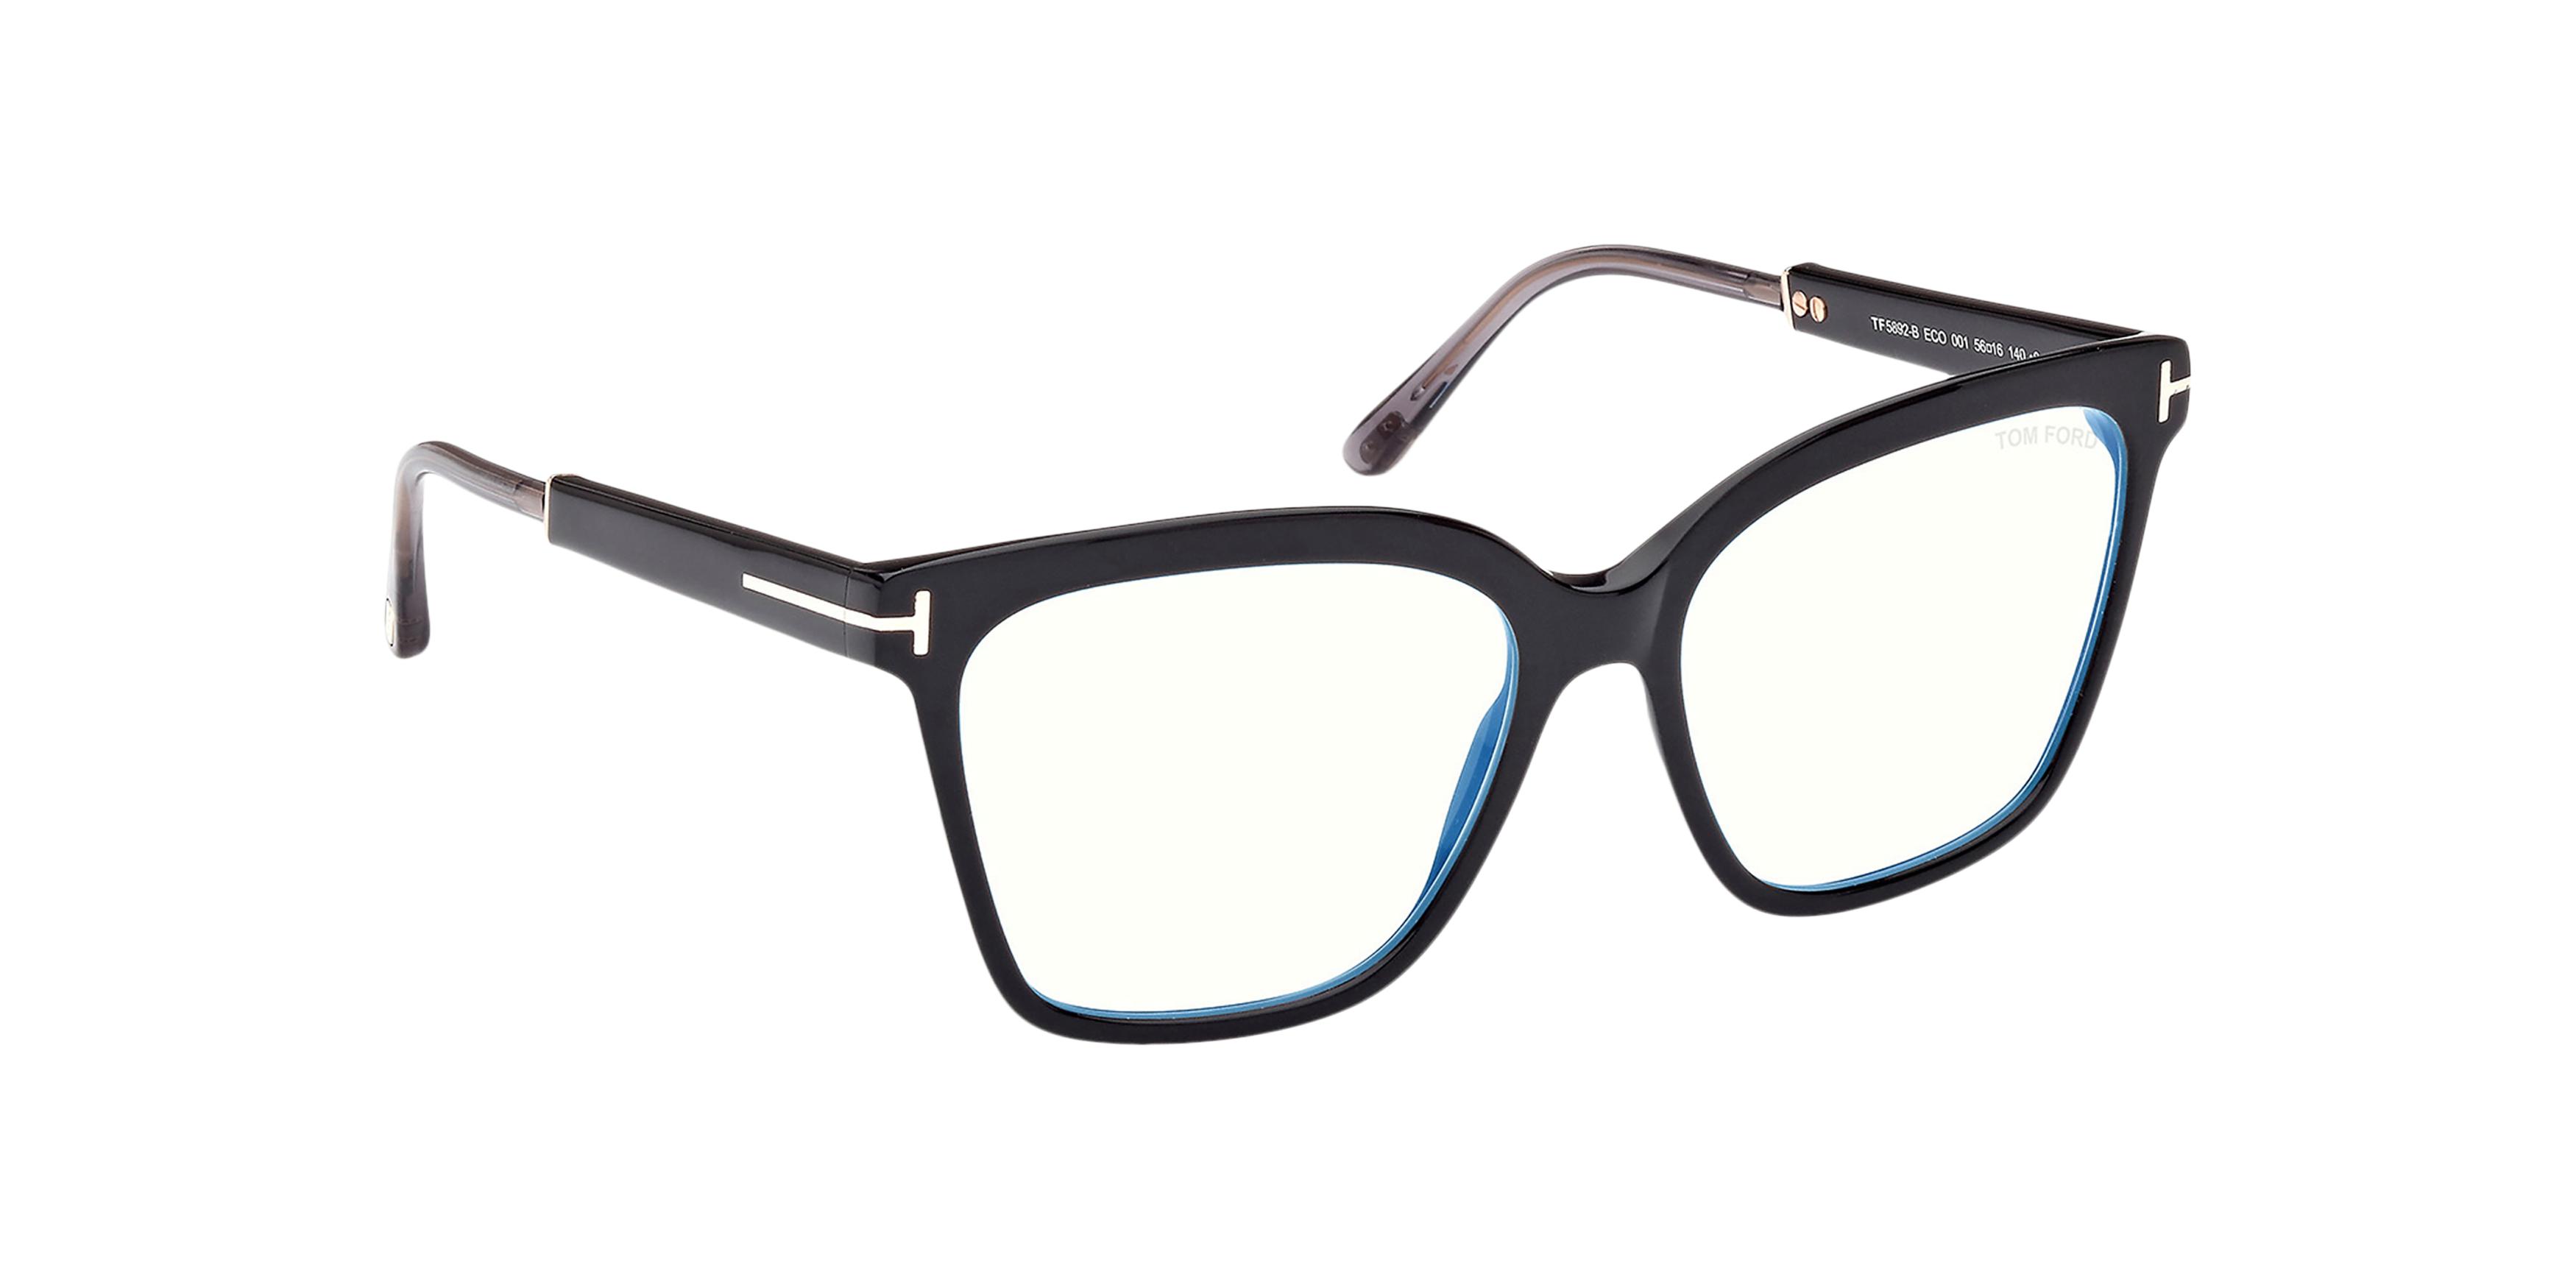 Angle_Right01 Tom Ford FT 5892-B Glasses Transparent / Black